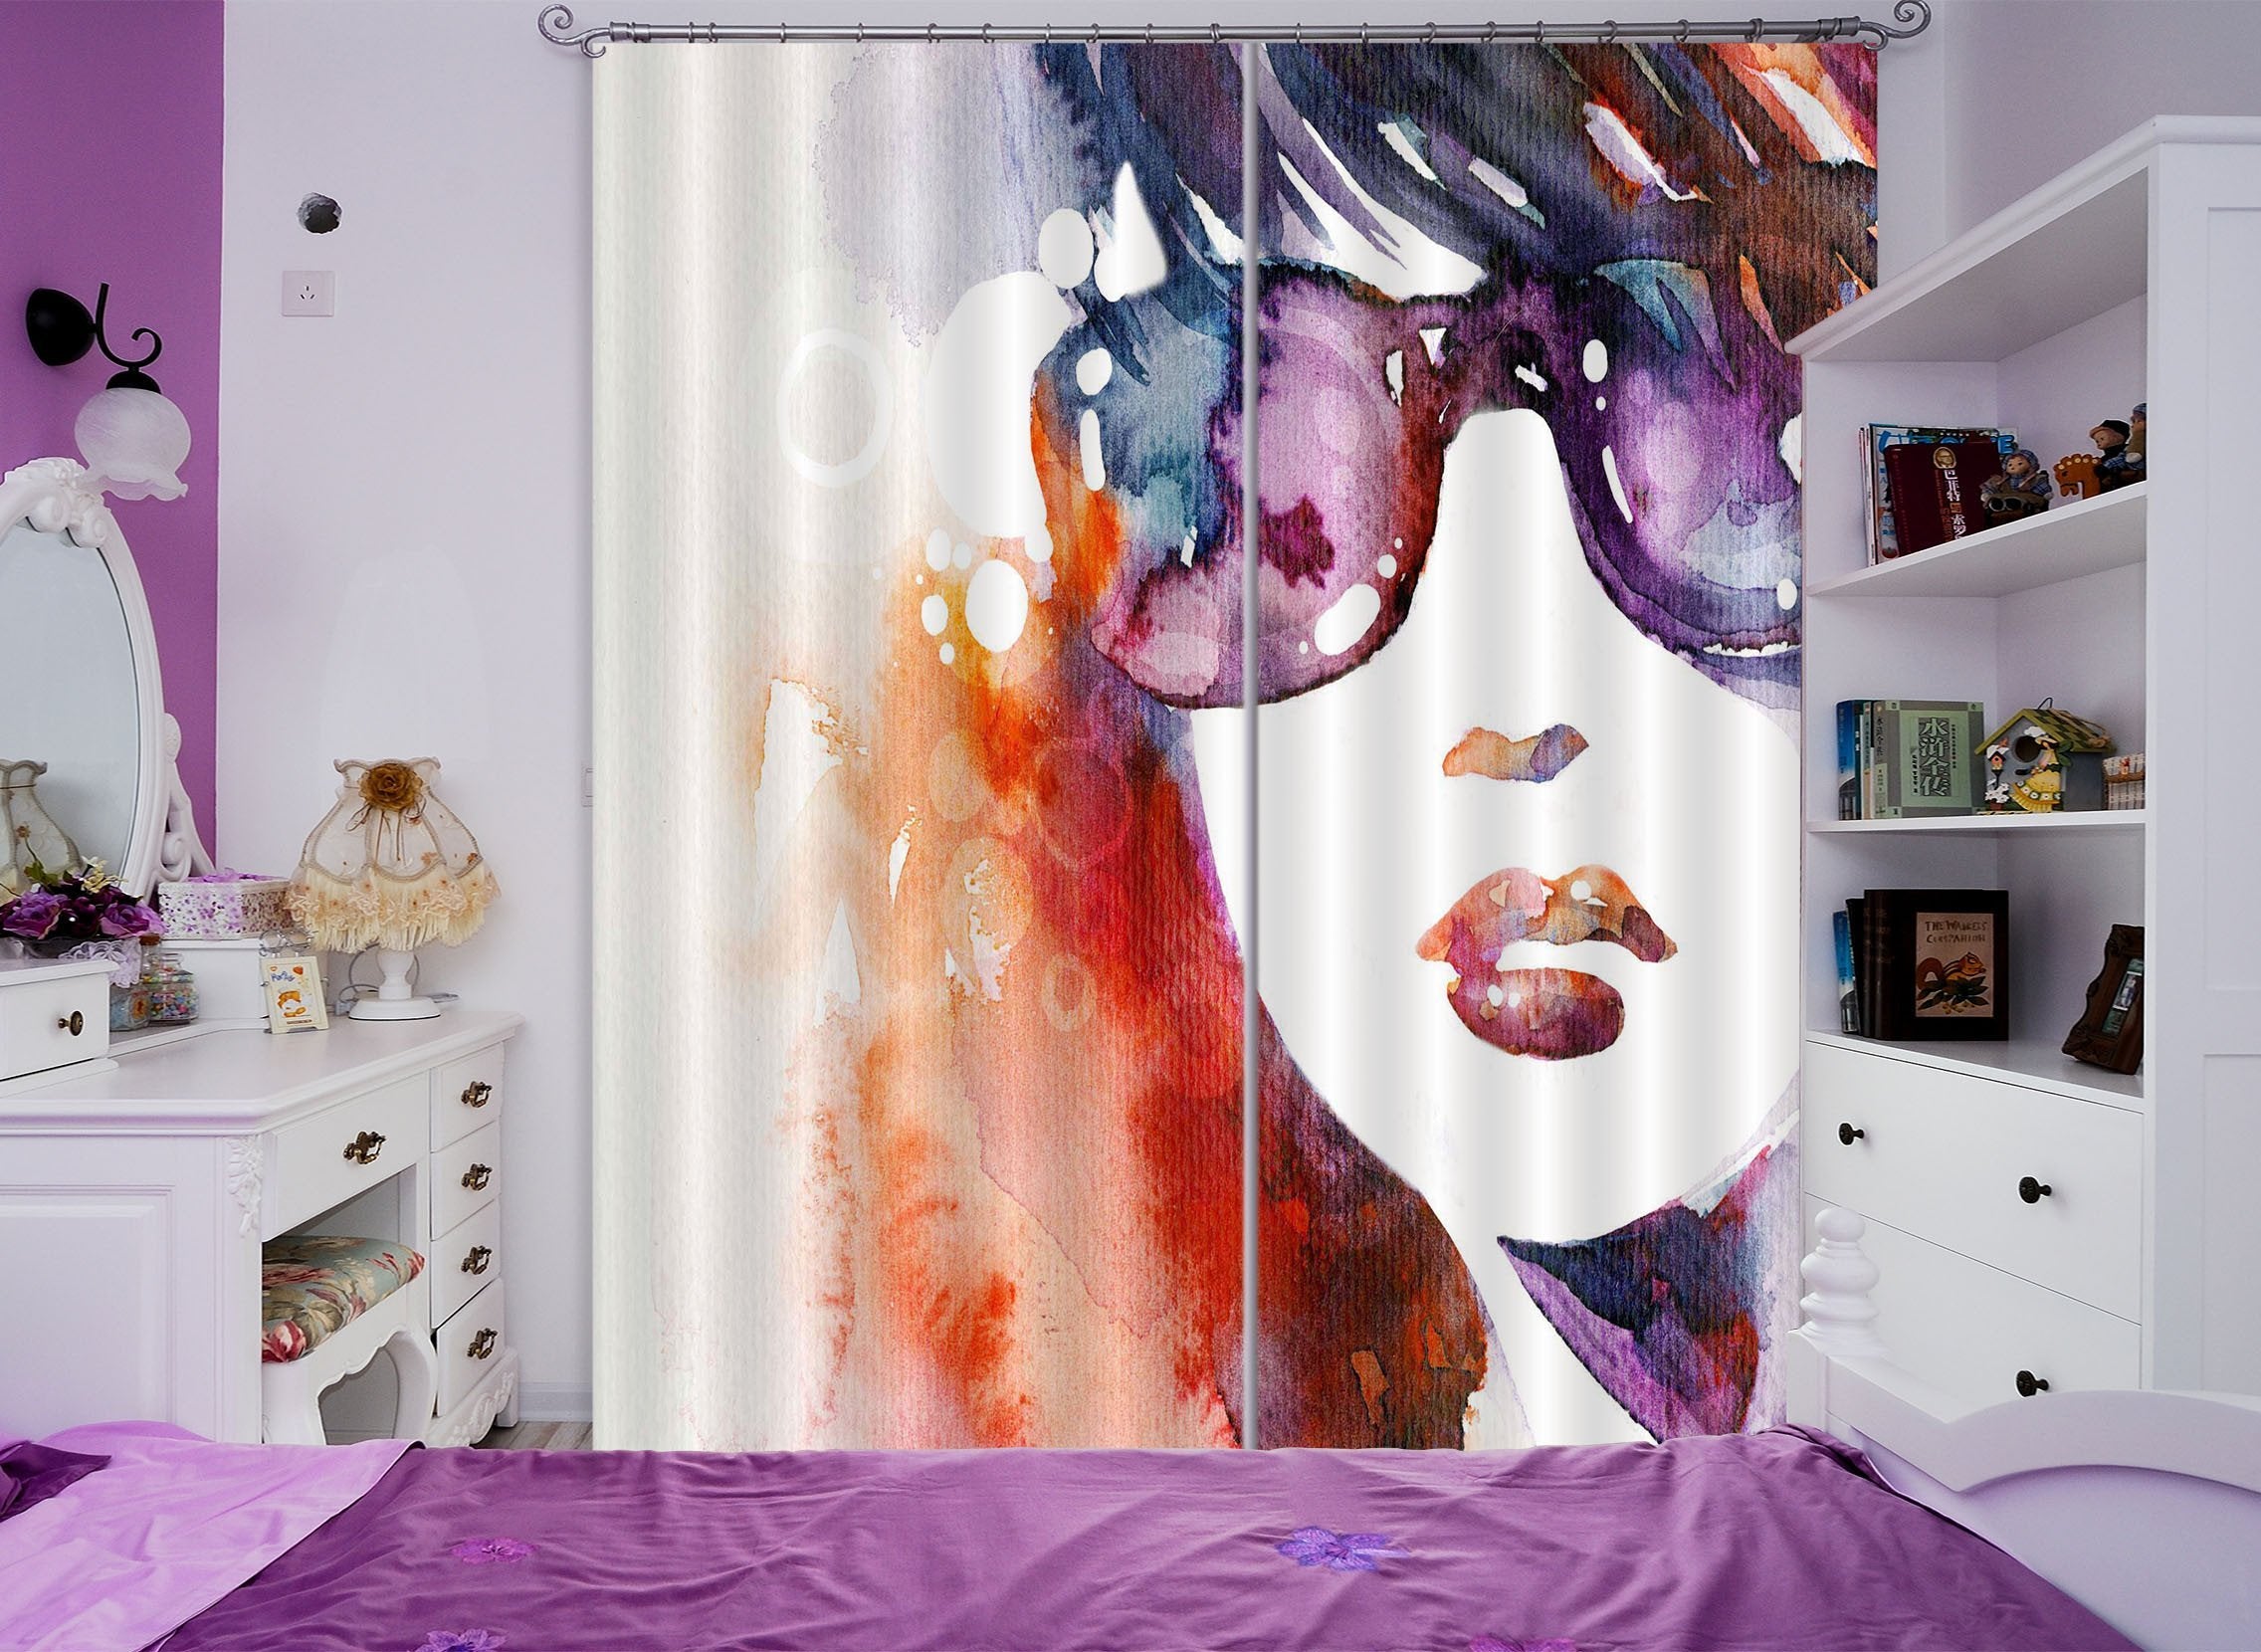 3D Graffiti Fashion Woman 762 Curtains Drapes Wallpaper AJ Wallpaper 